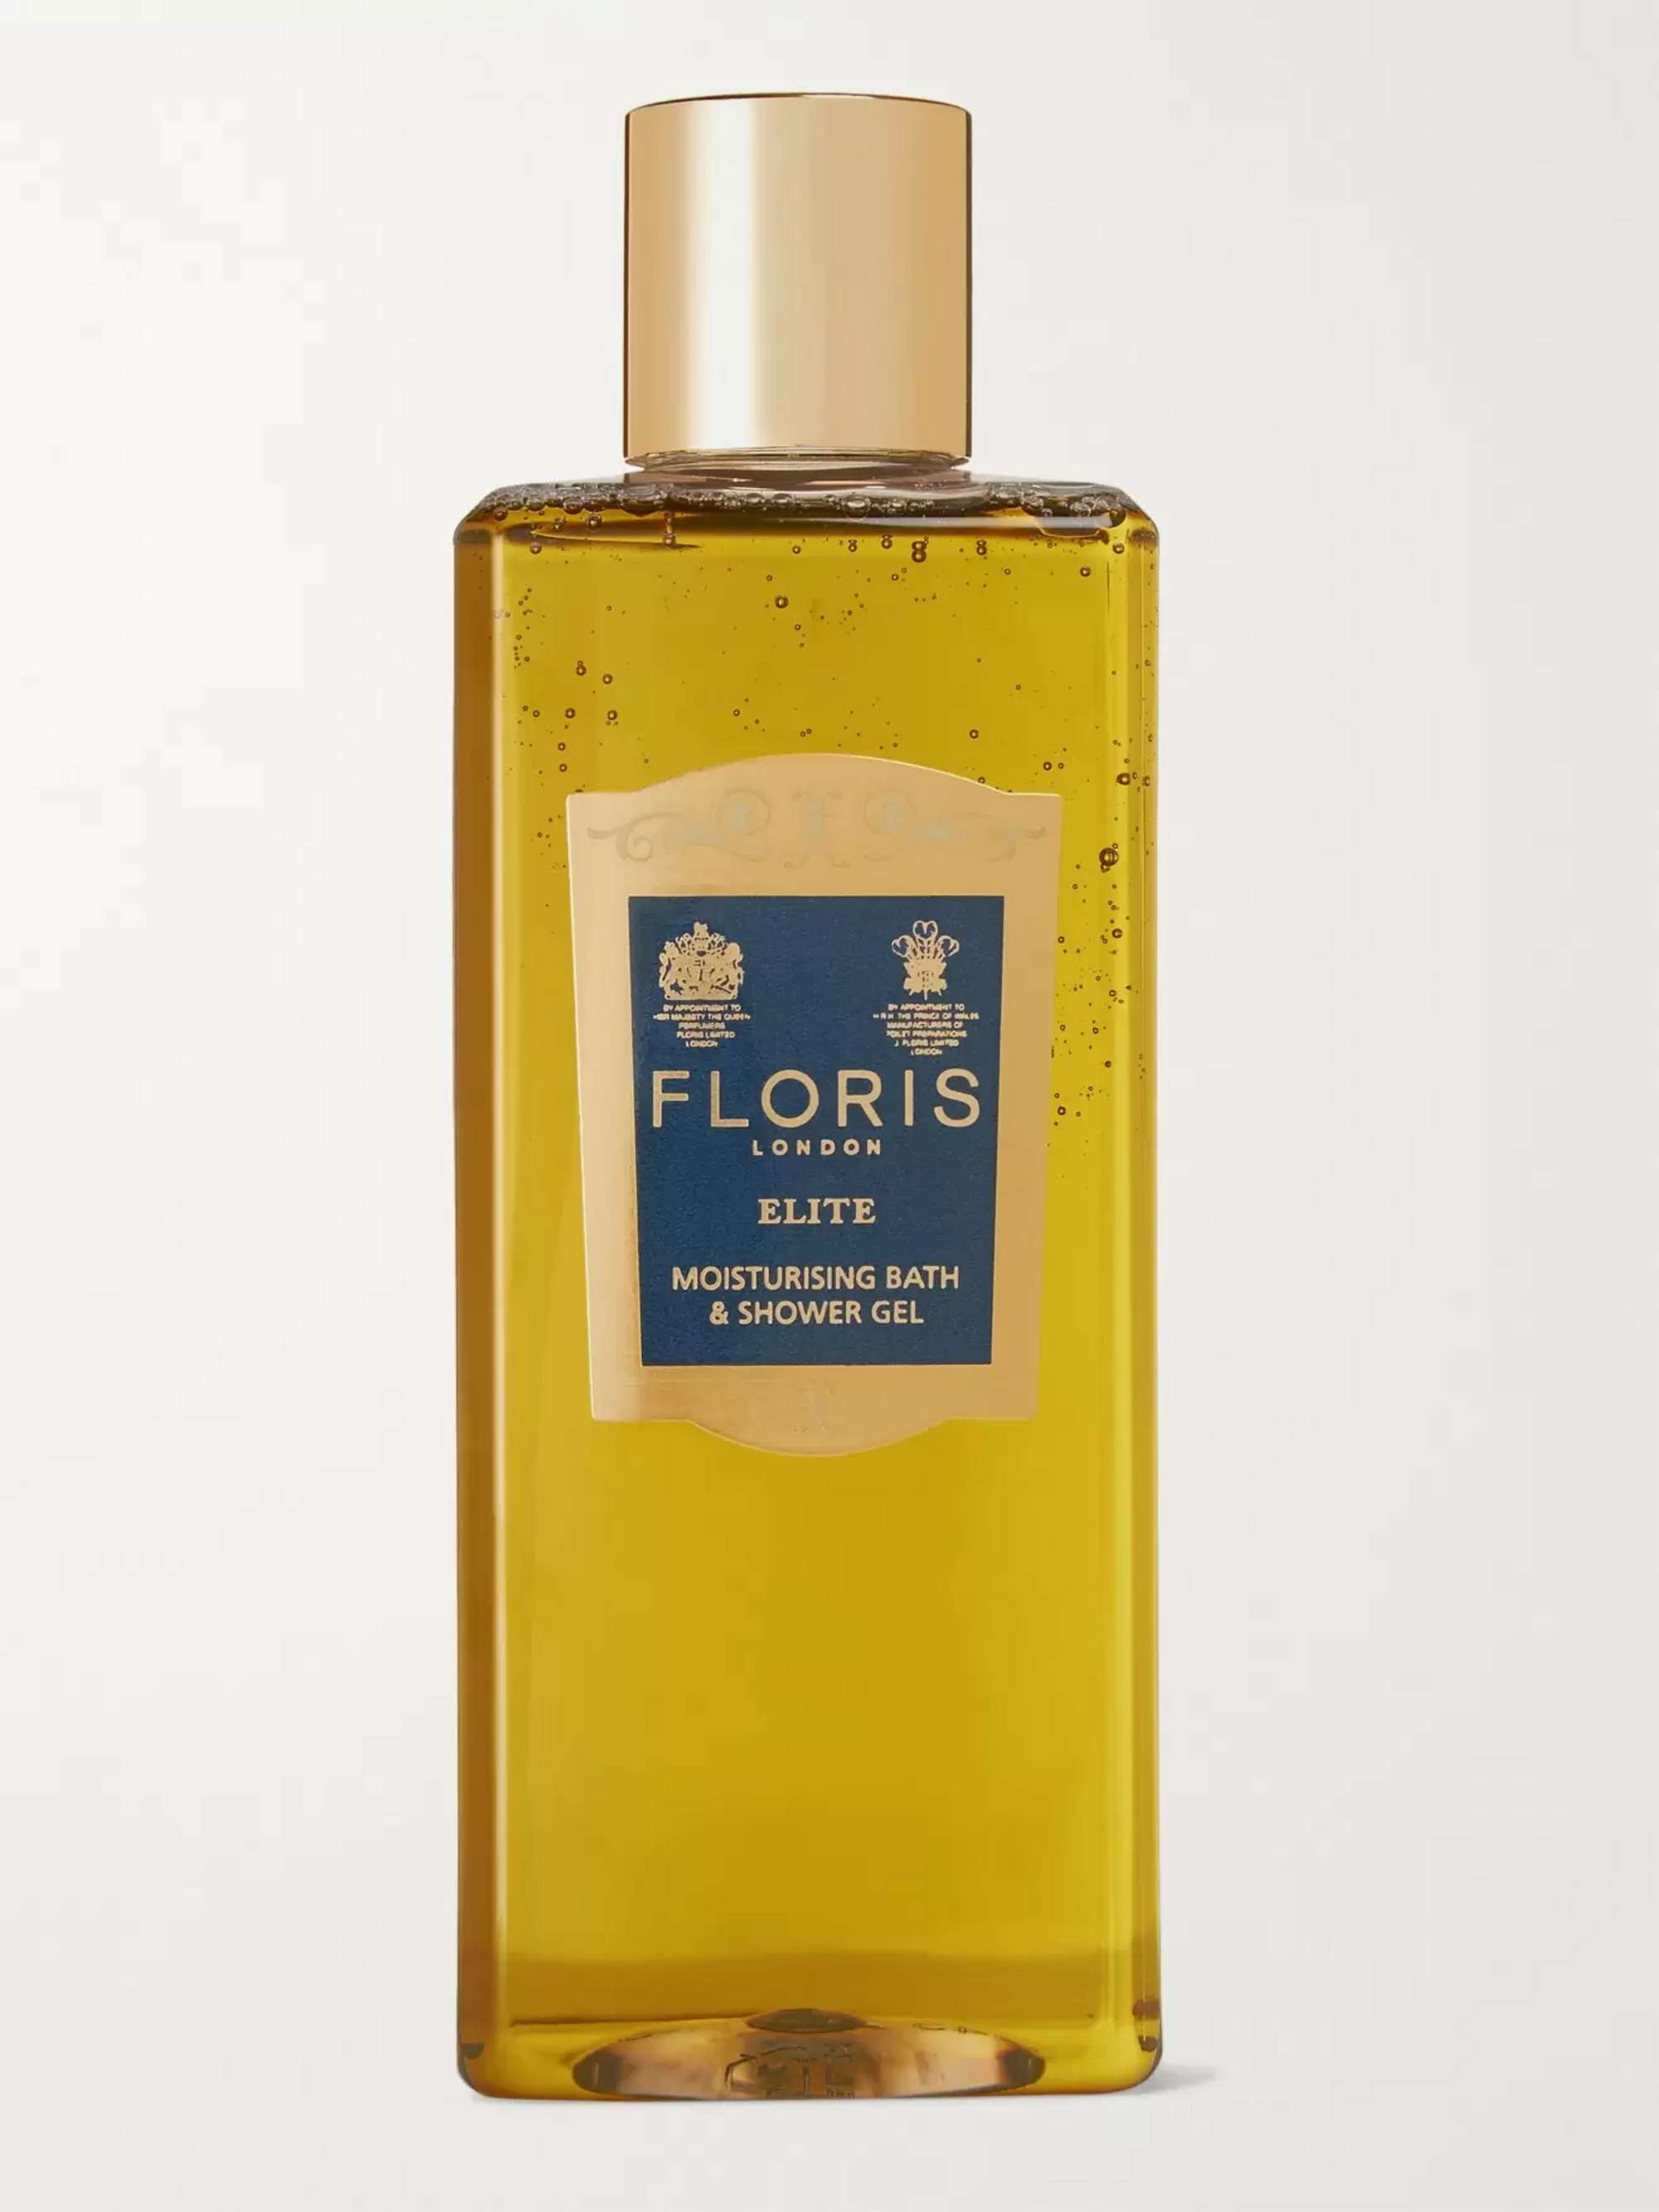 Floris London Elite Bath & Shower Gel, 250ml